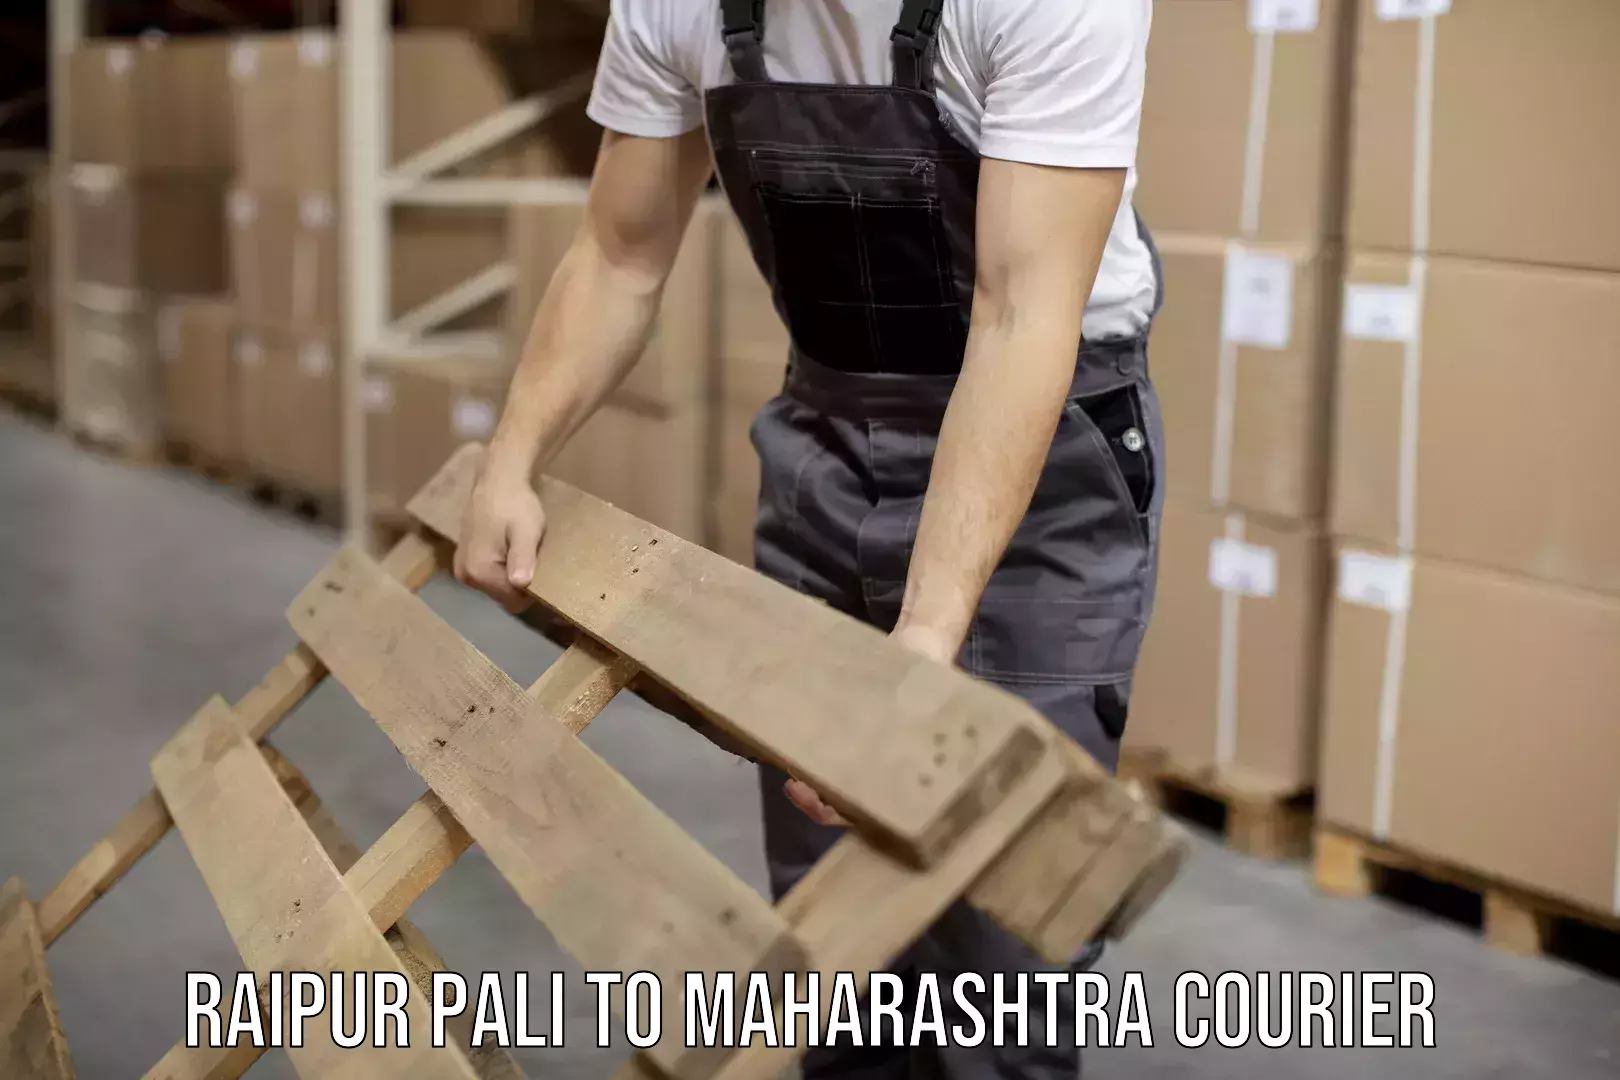 Professional courier handling Raipur Pali to Yeola